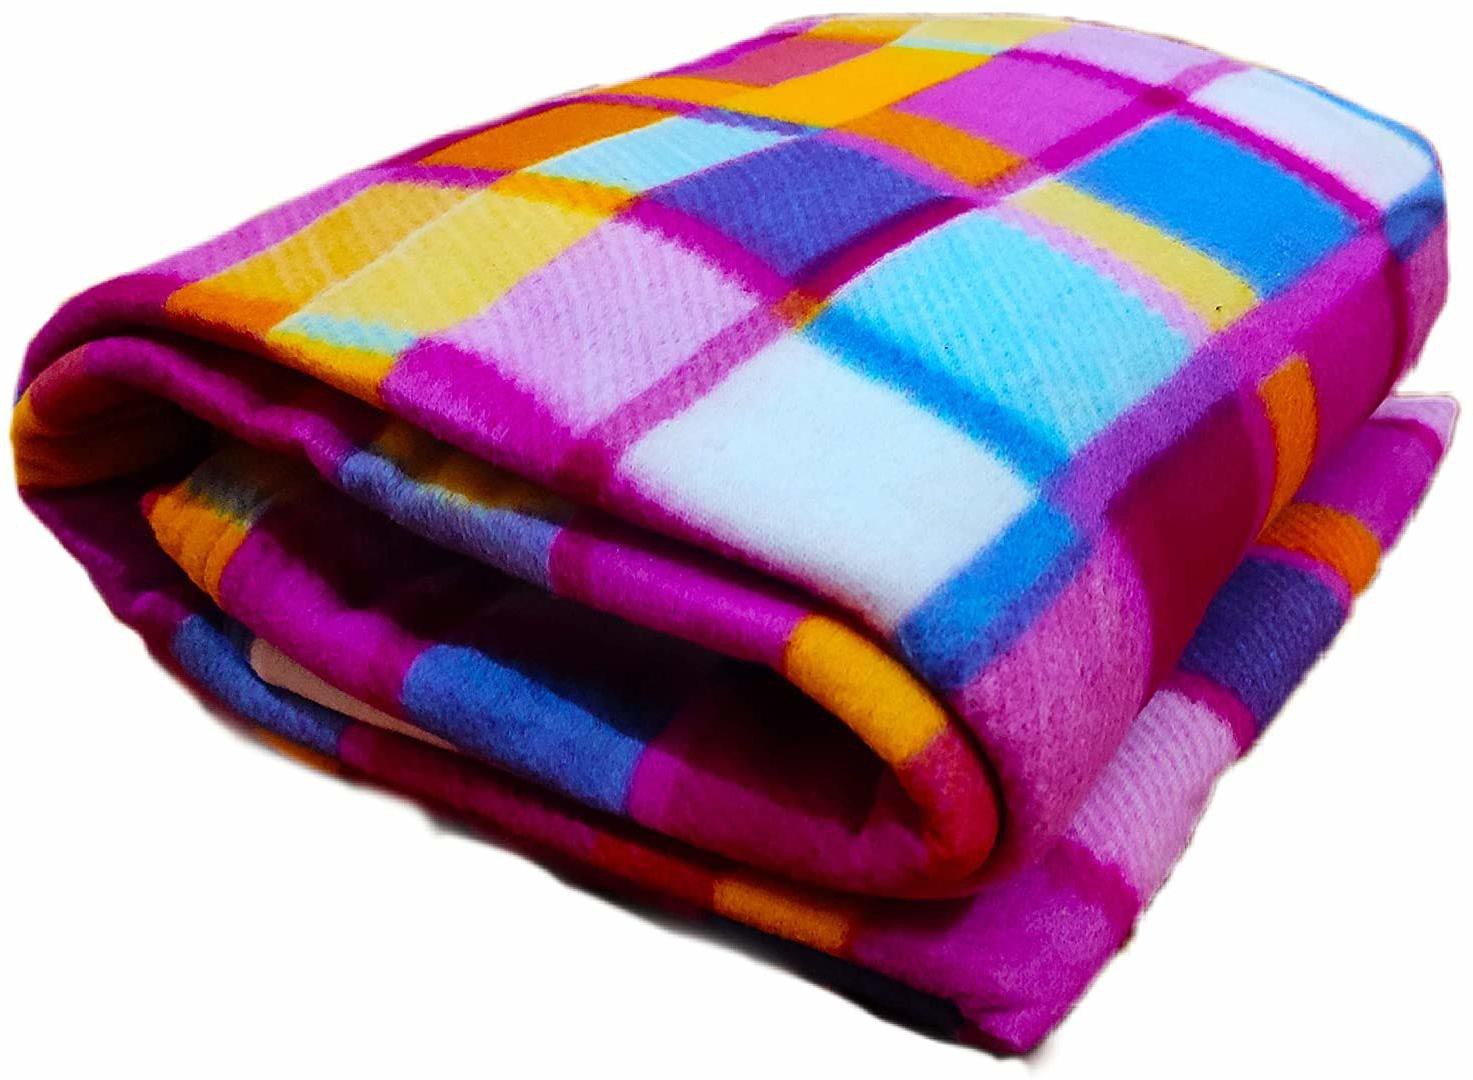 Visnik Single Fleece Duvet Cover (Multicolor)